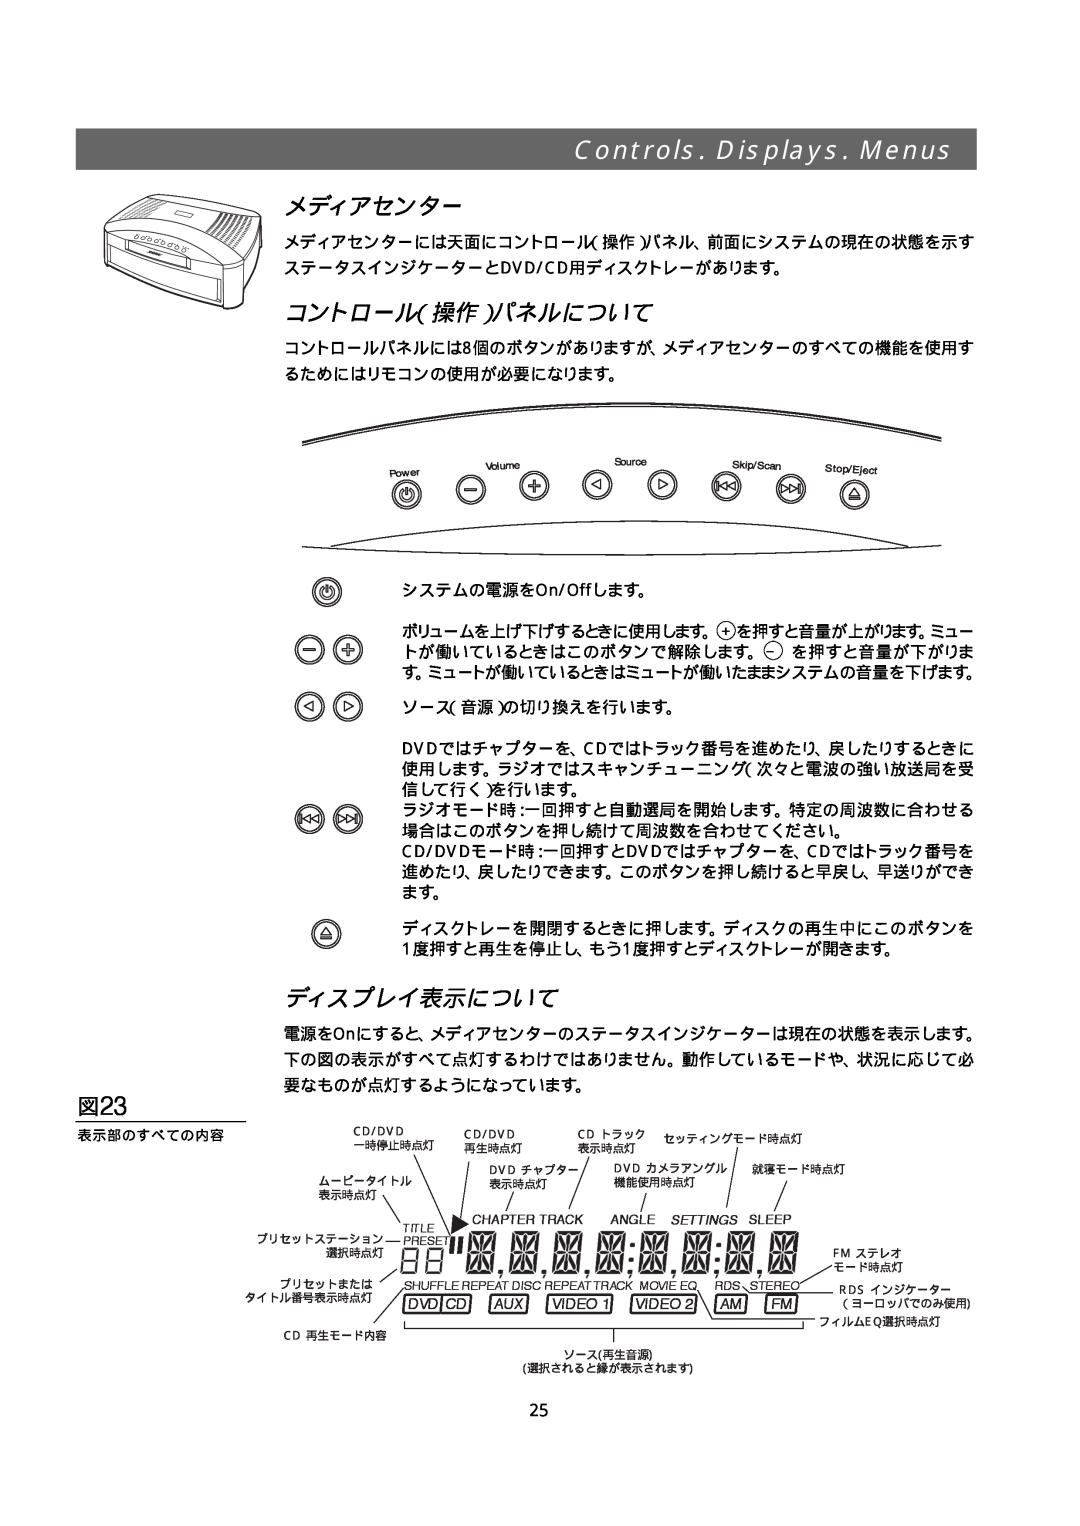 Bose 321GS owner manual メディアセンター, コントロール（操作）パネルについて, ディスプレイ表示について, Controls. Displays. Menus 